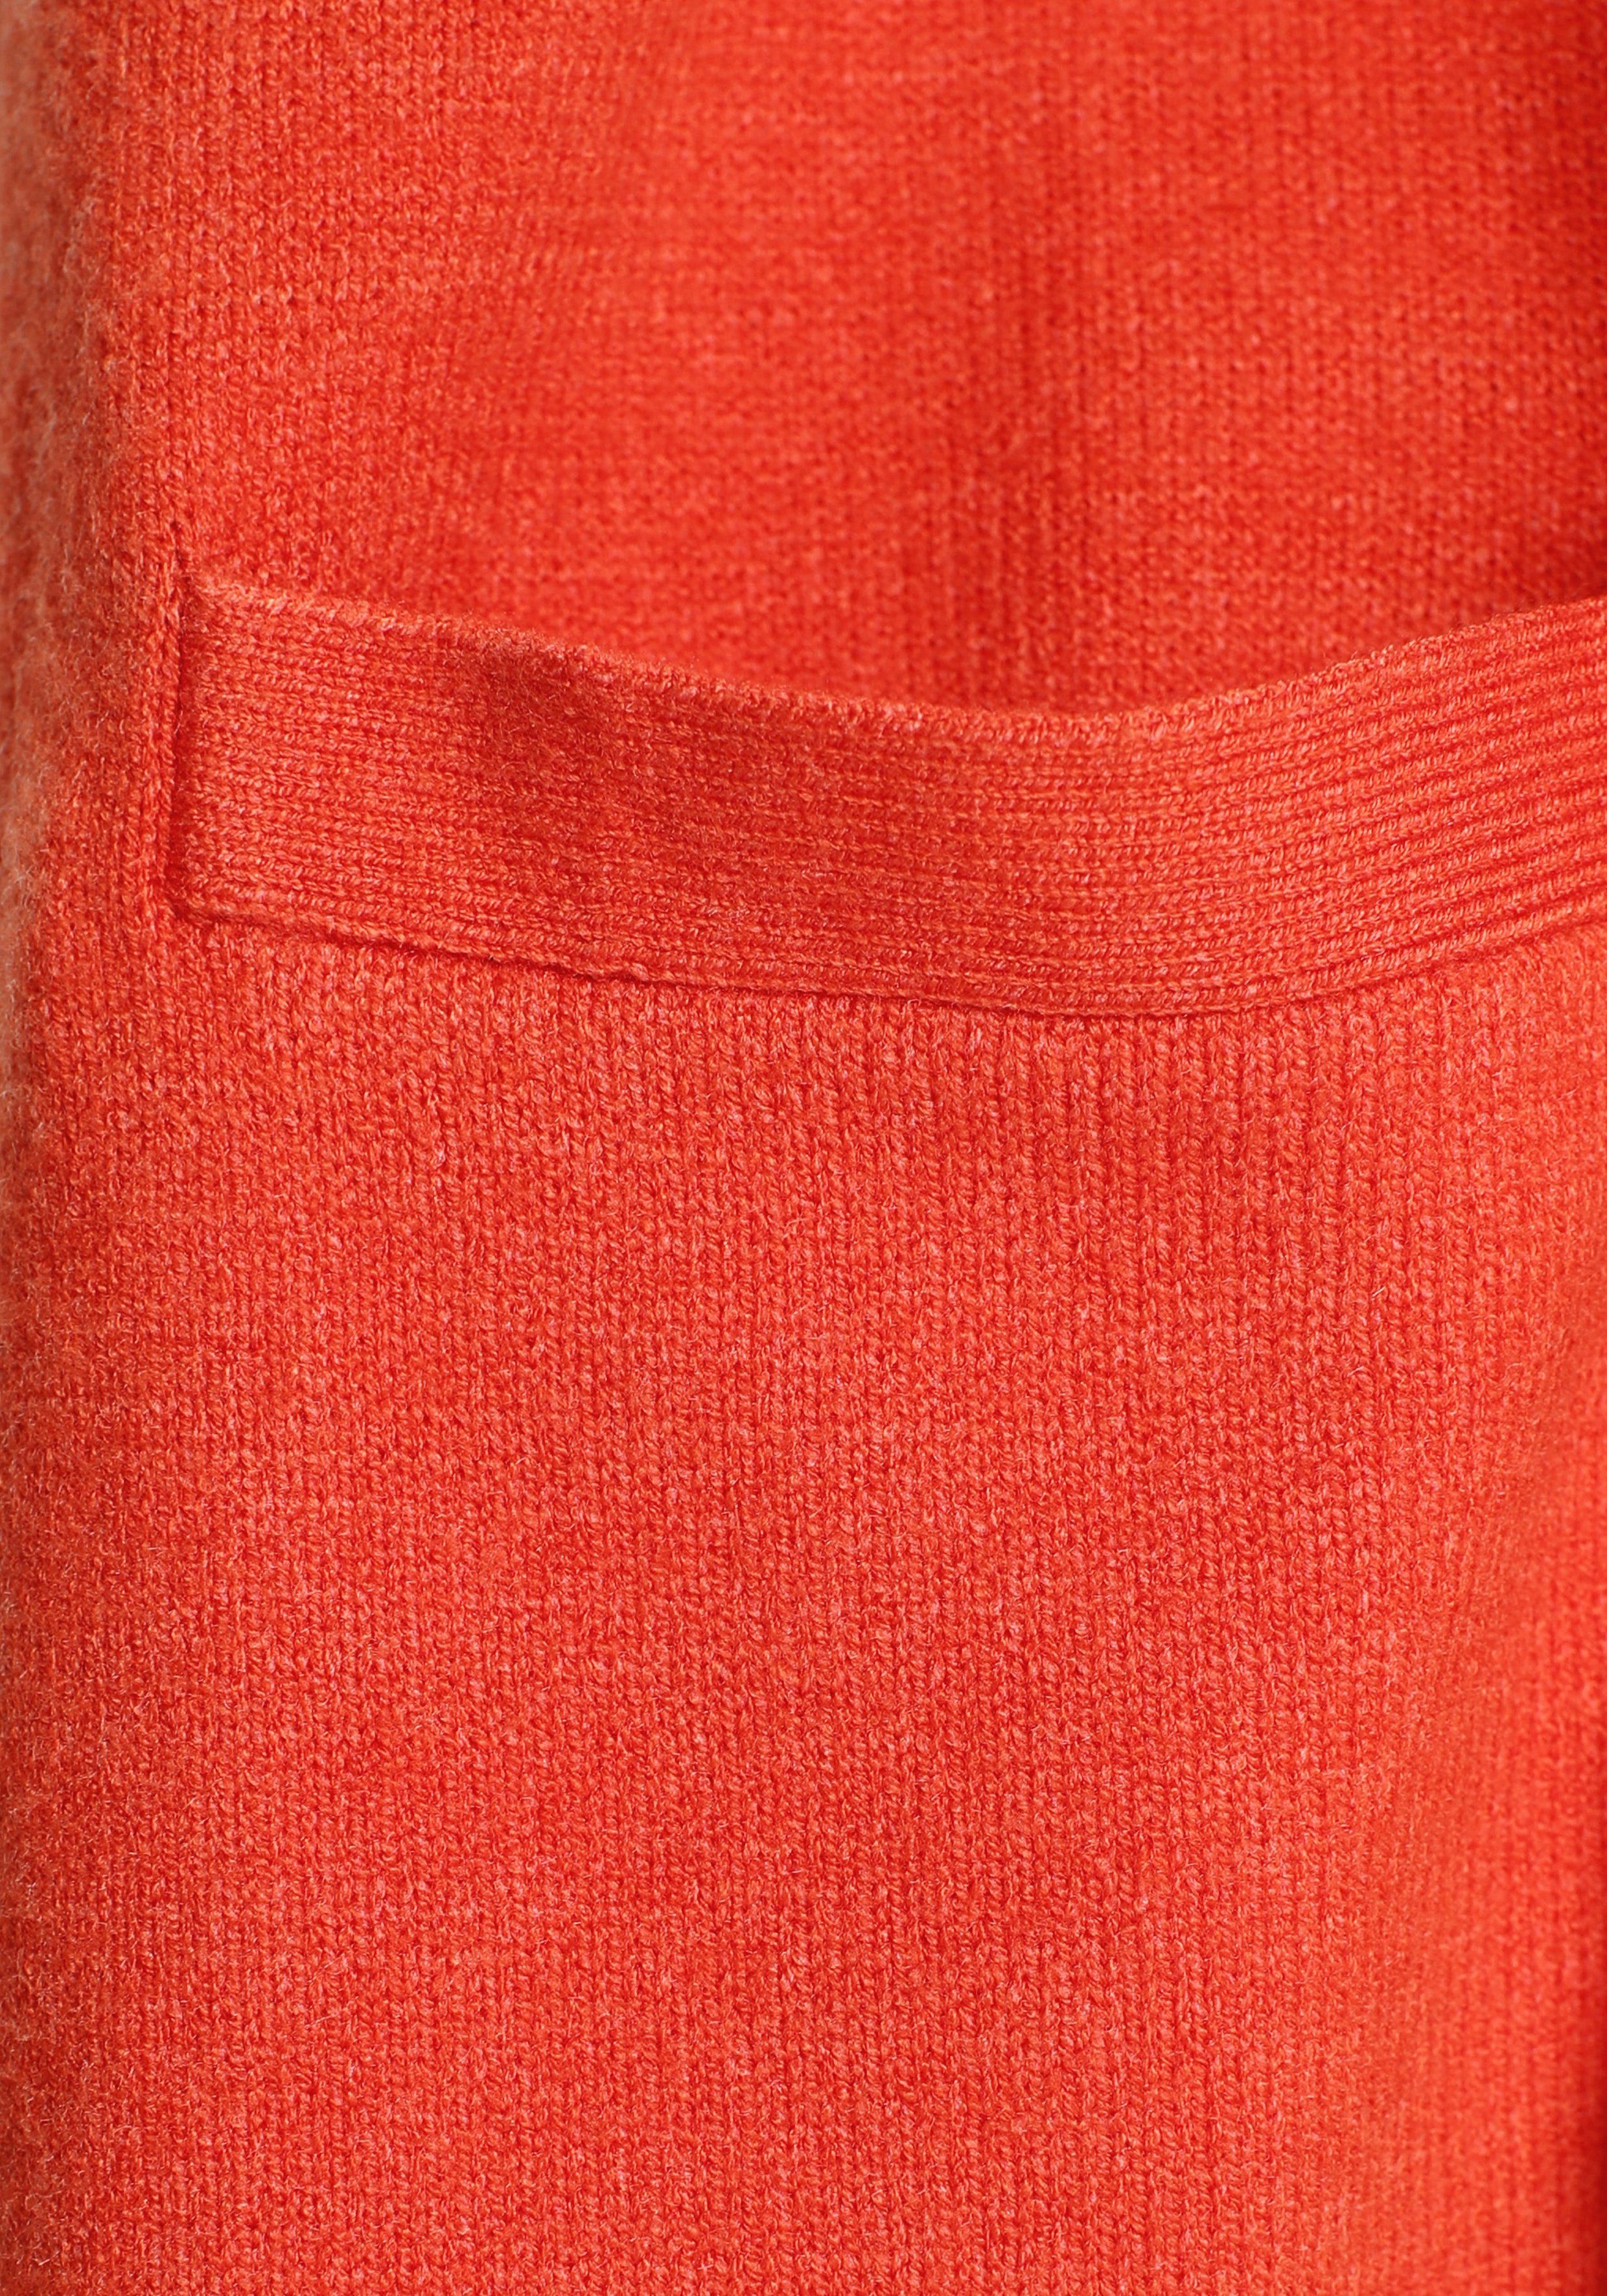 Tamaris Taschen melange orange-rot mit Cardigan